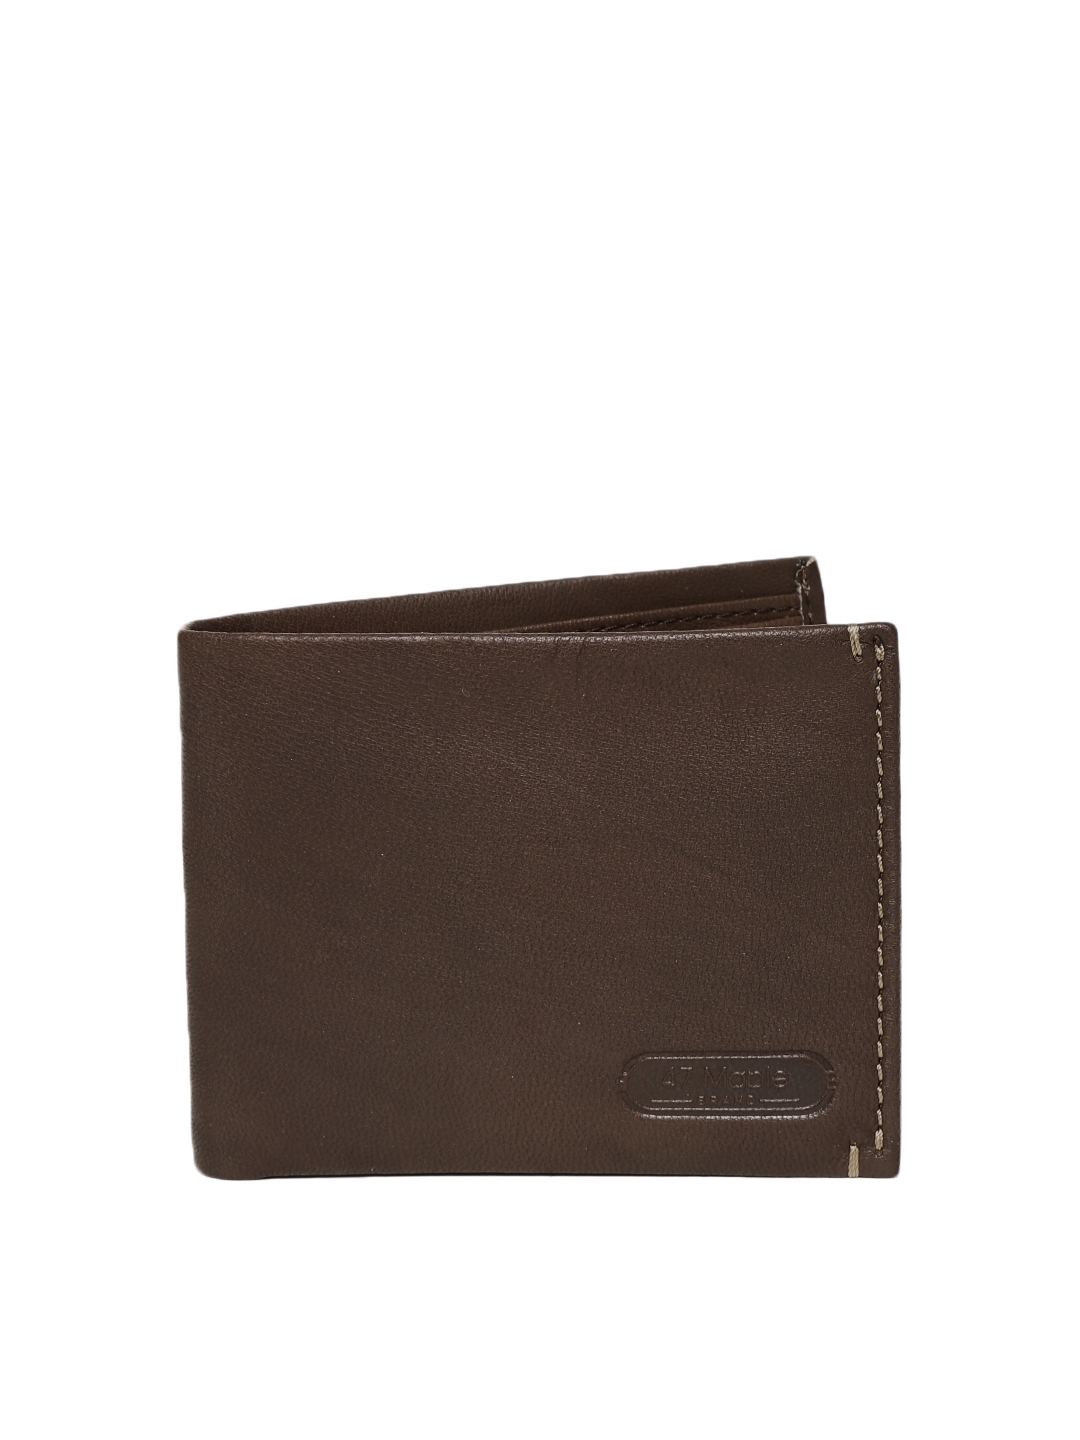 Buy 47 Maple Men Brown Leather Wallet - Wallets for Men 409950 | Myntra